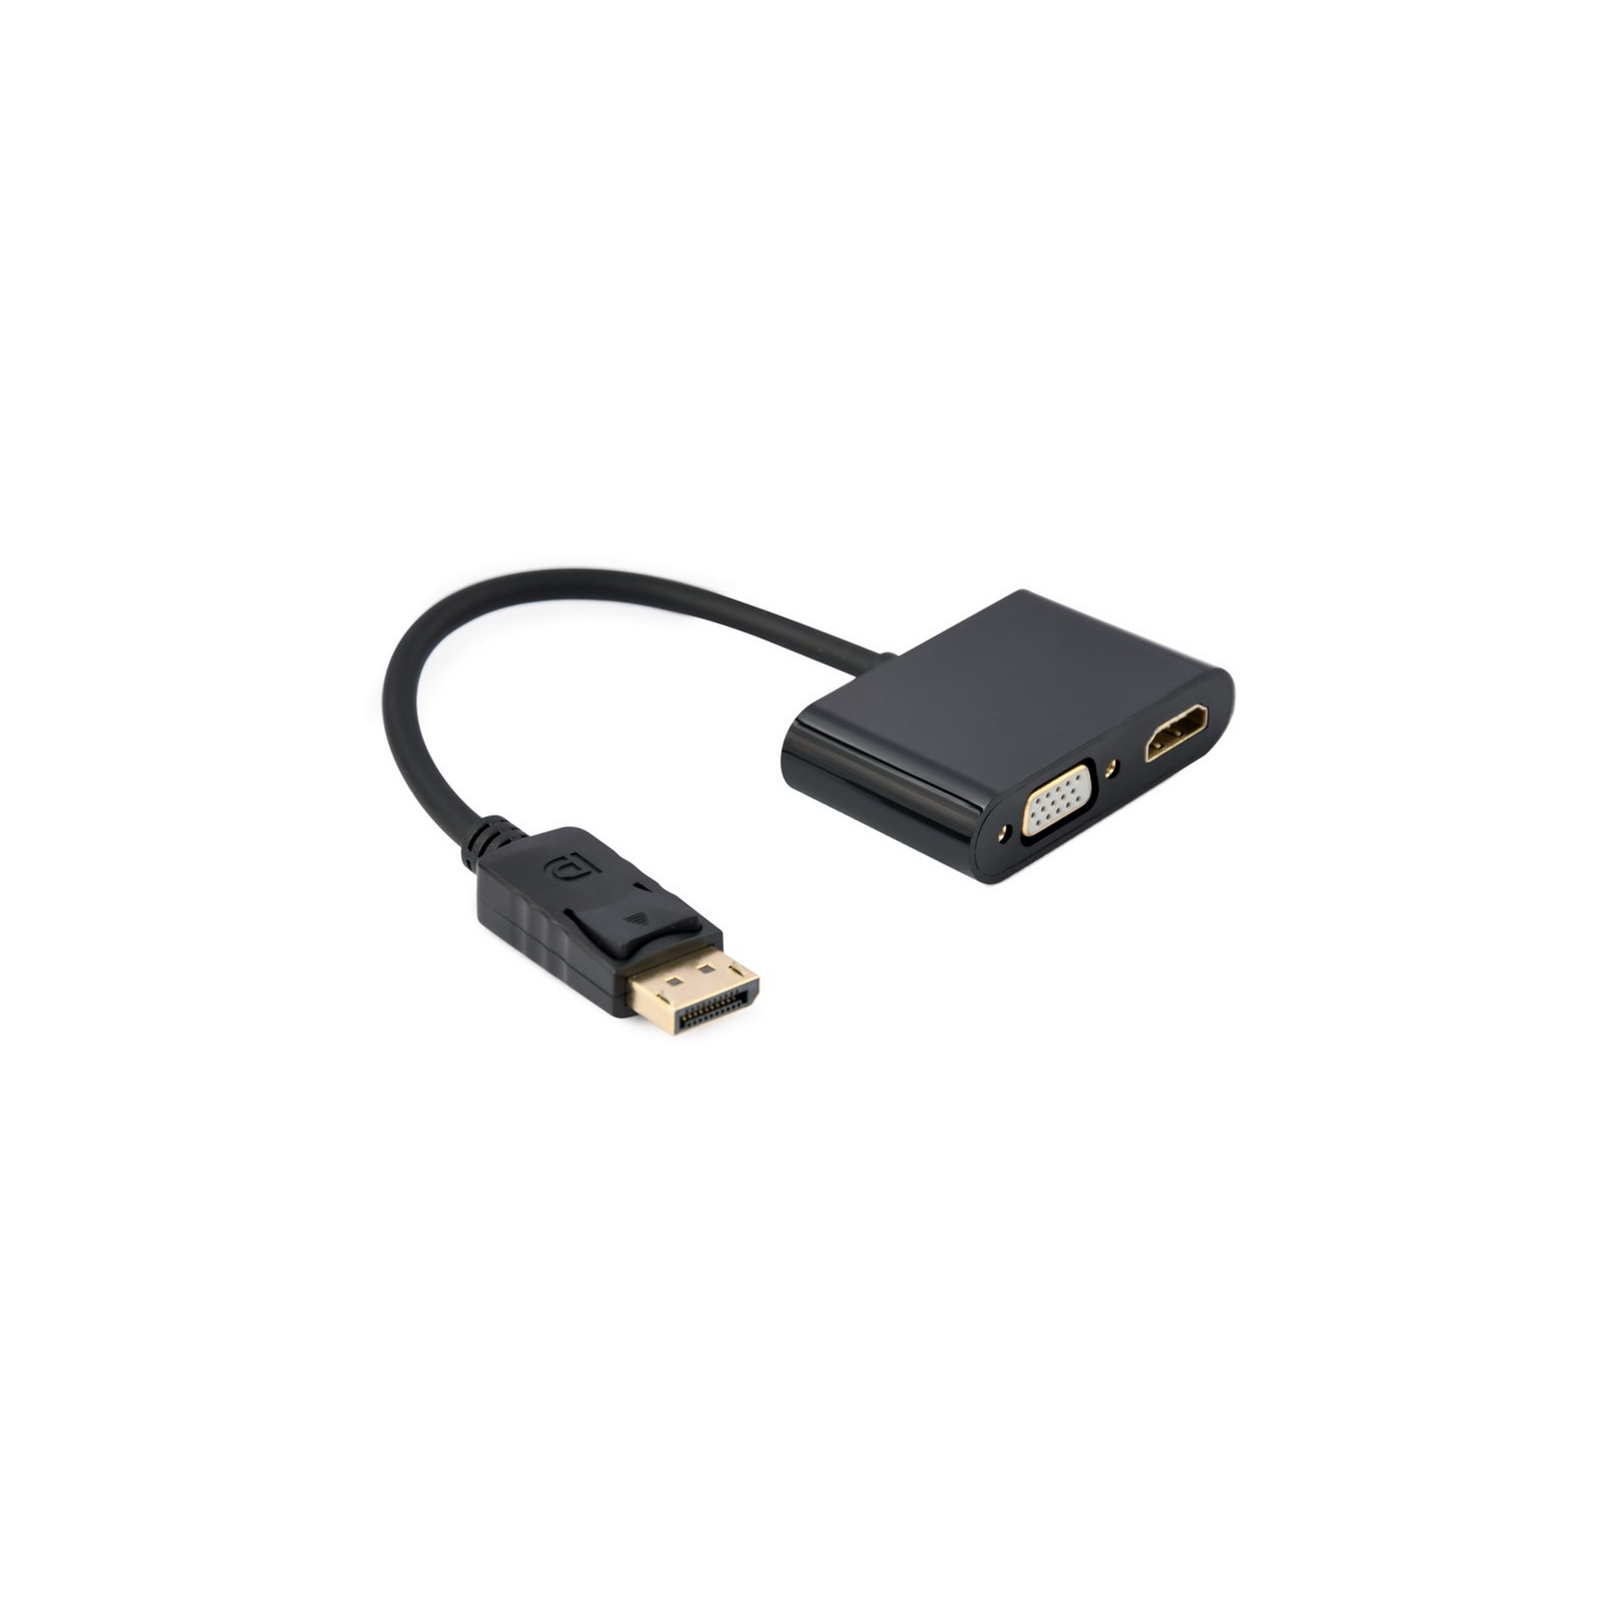 Переходник Cablexpert DisplayPort to HDMI/VGA (A-DPM-HDMIFVGAF-01)